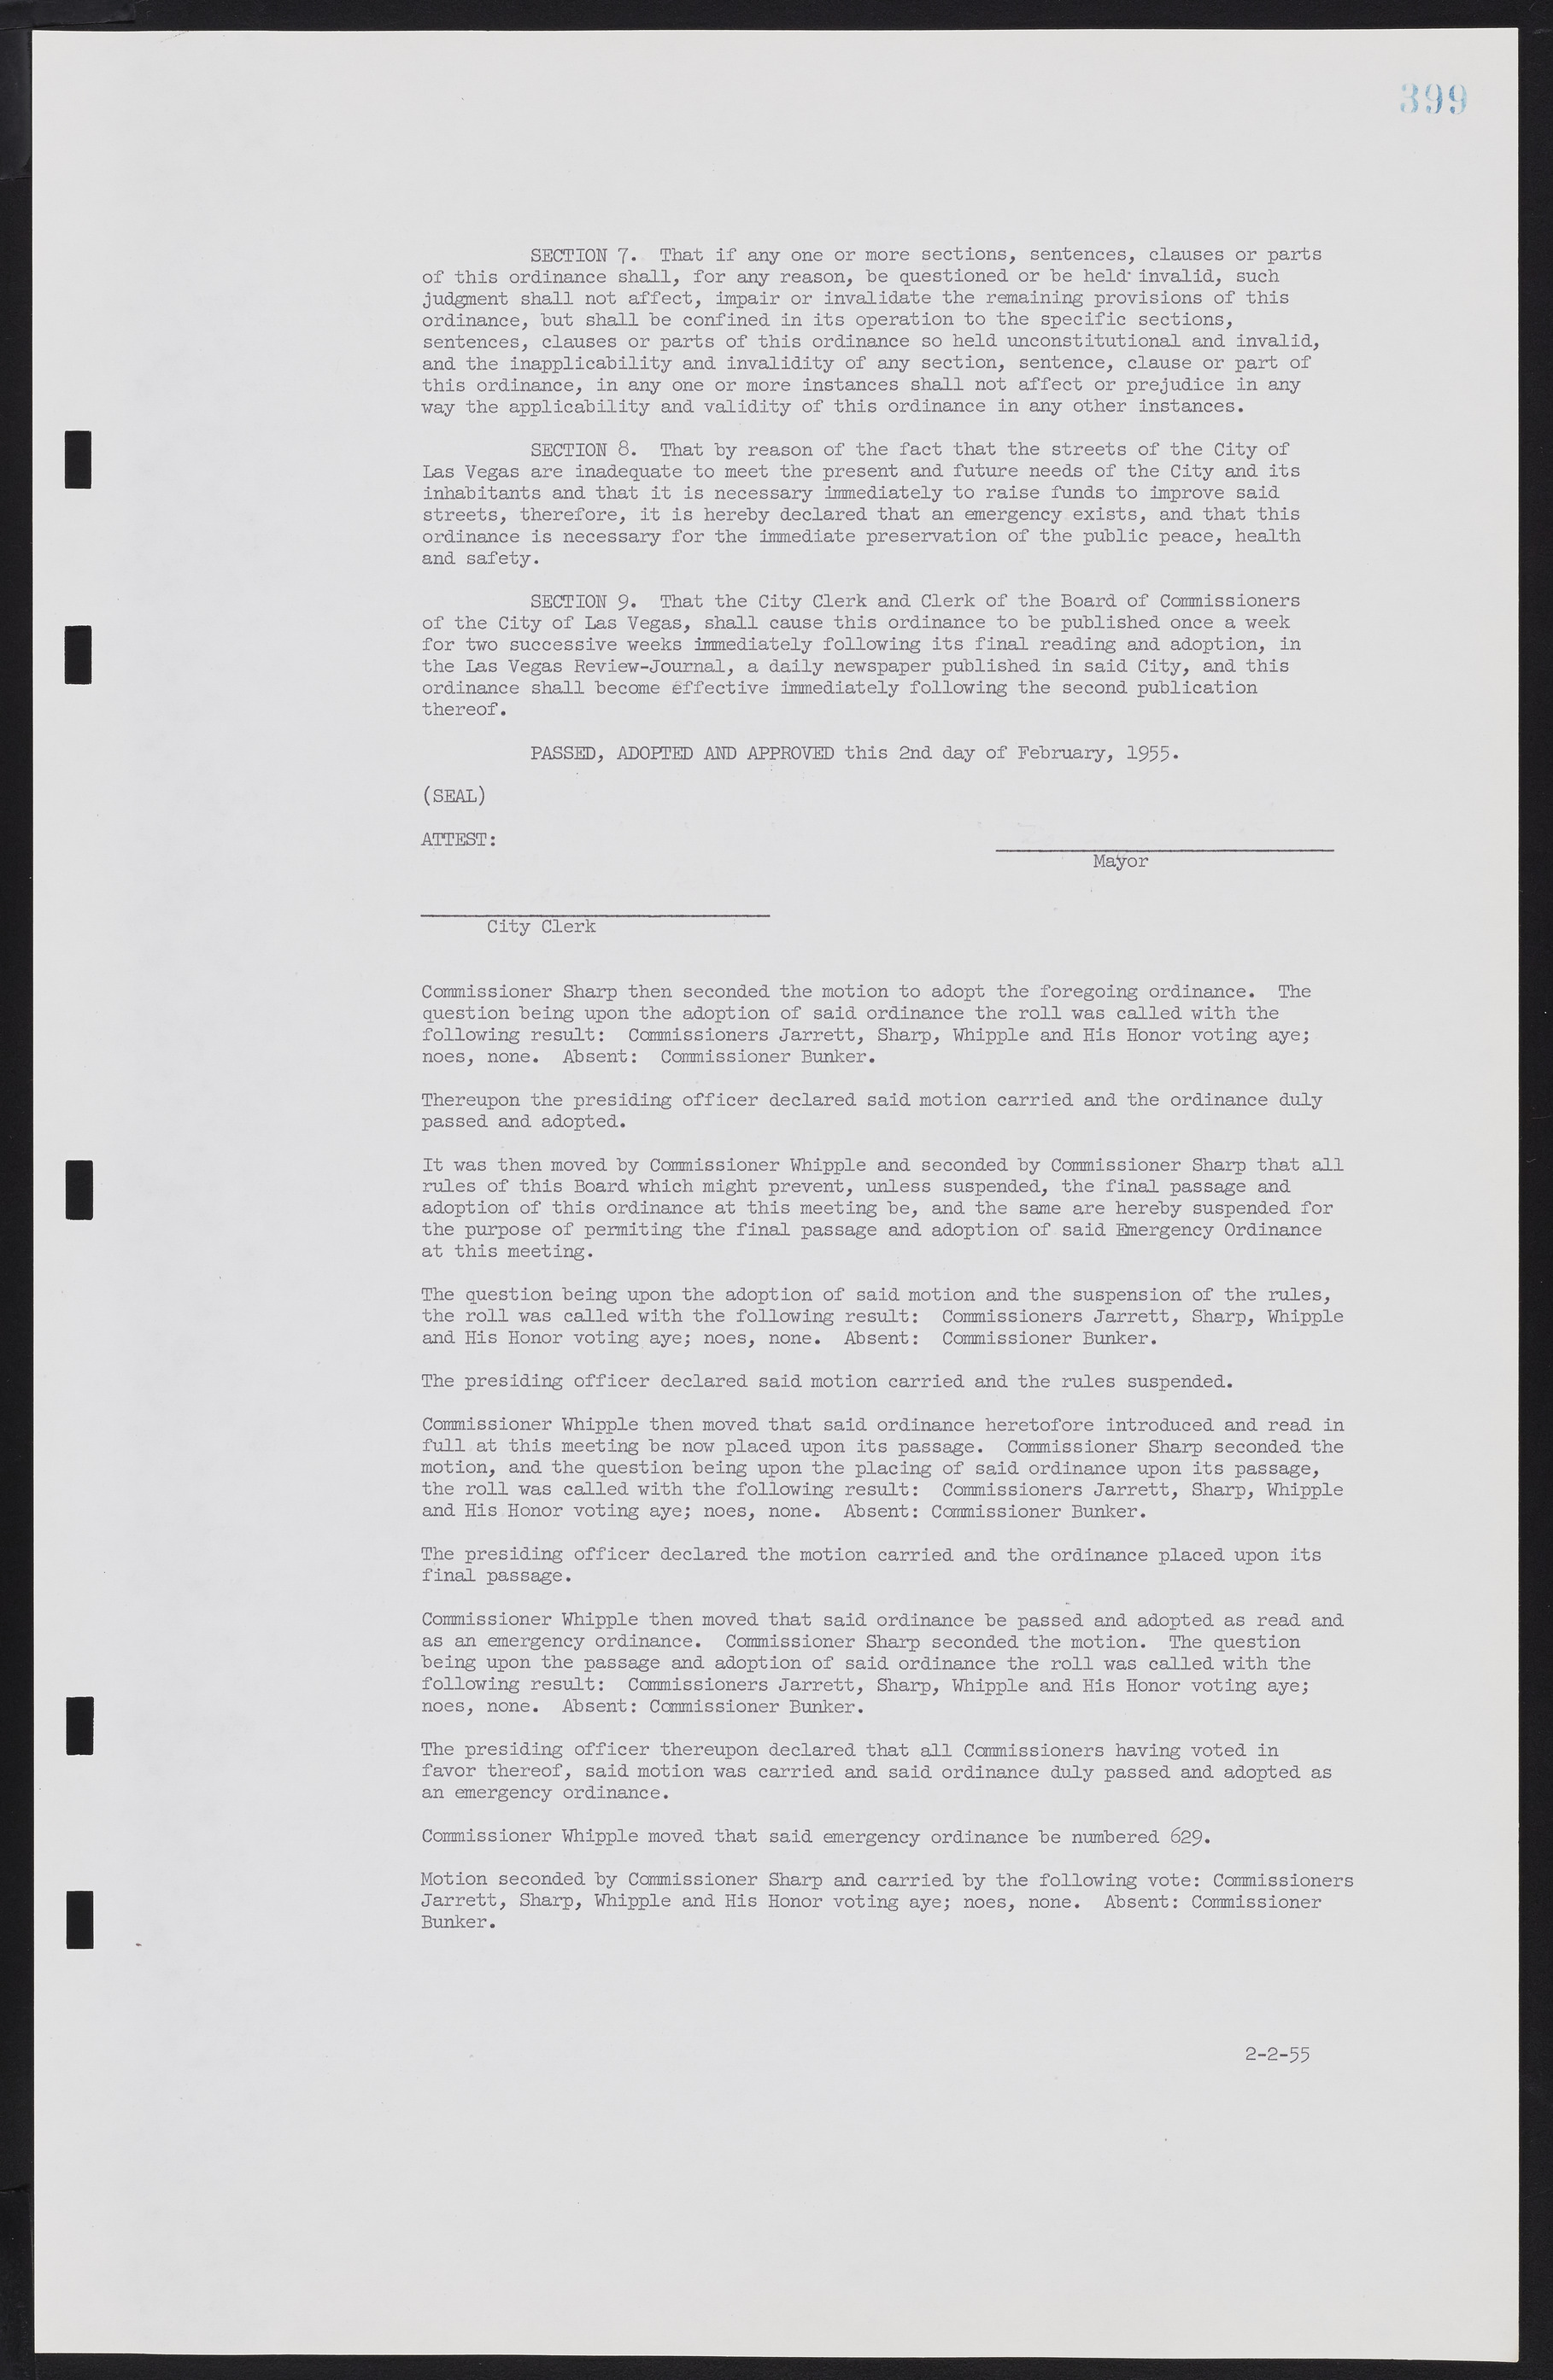 Las Vegas City Commission Minutes, February 17, 1954 to September 21, 1955, lvc000009-405